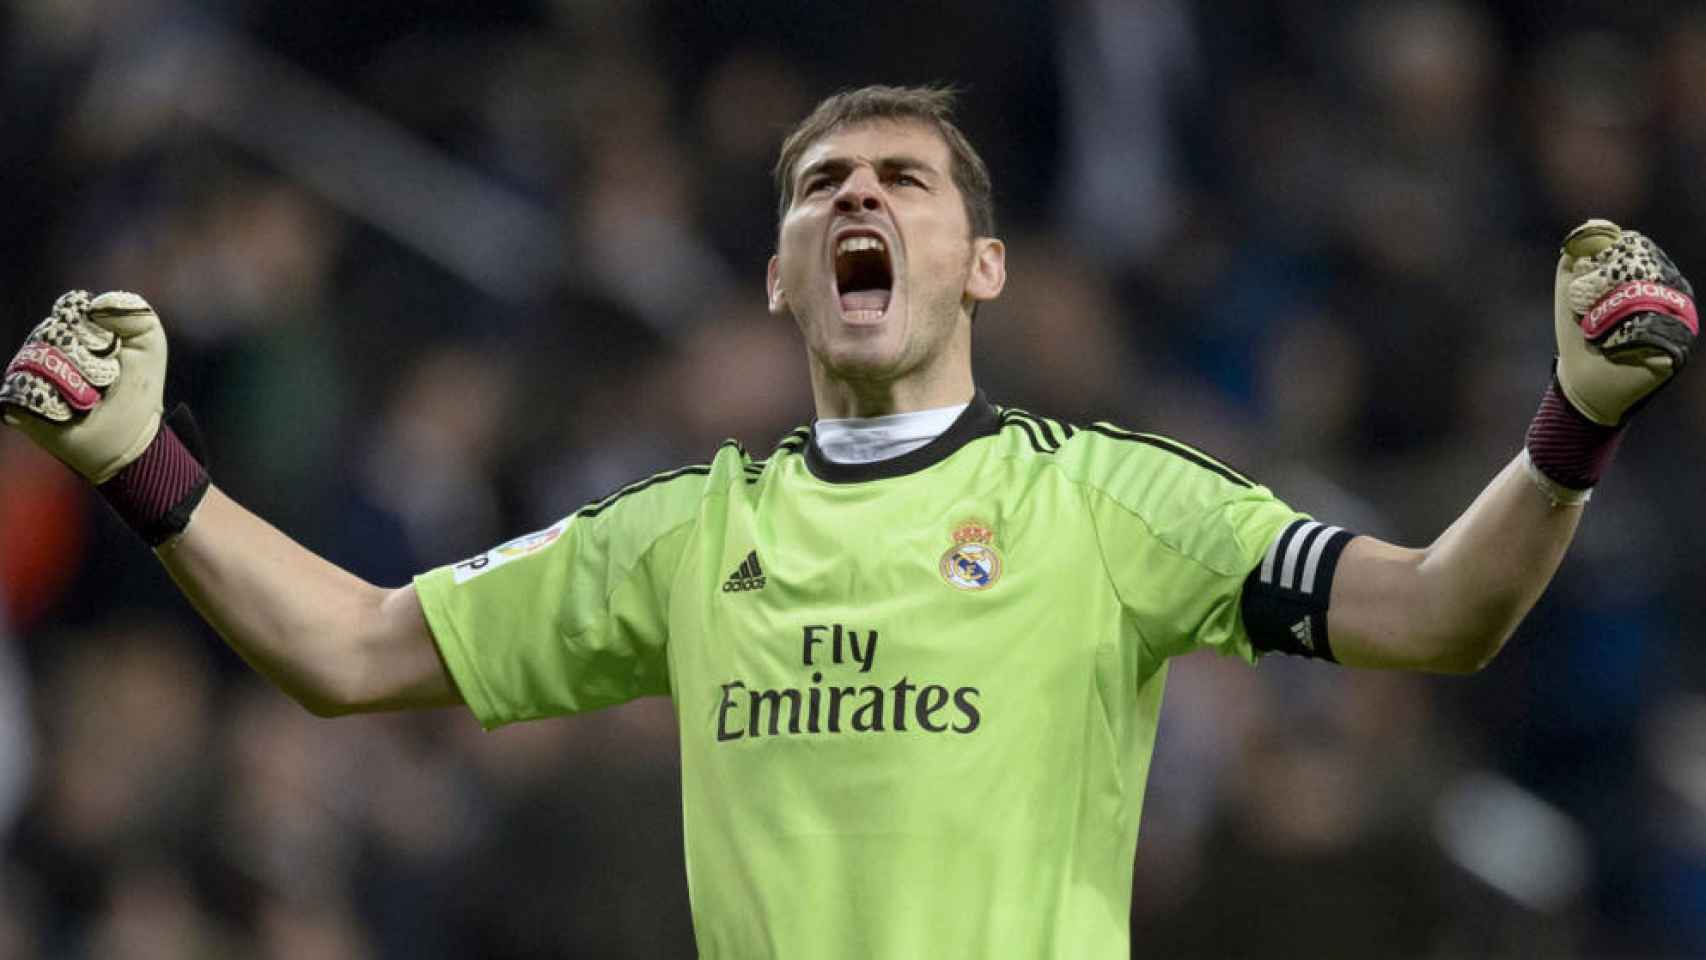 Former goalkeeper, Iker Casillas